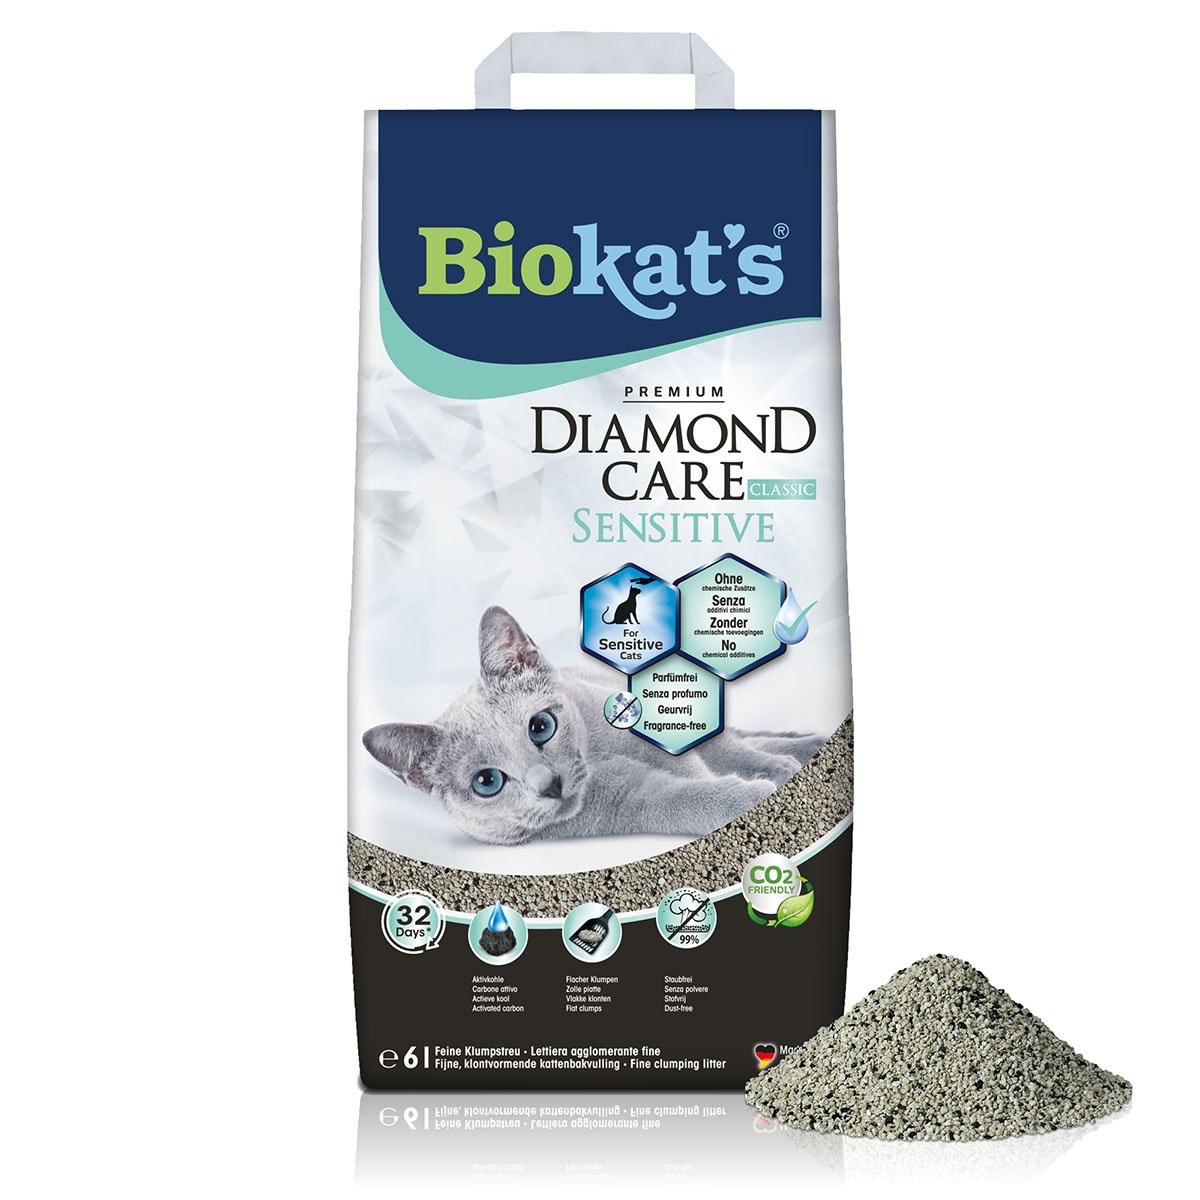 Biokat's Diamond Care Sensitive Classic 6L